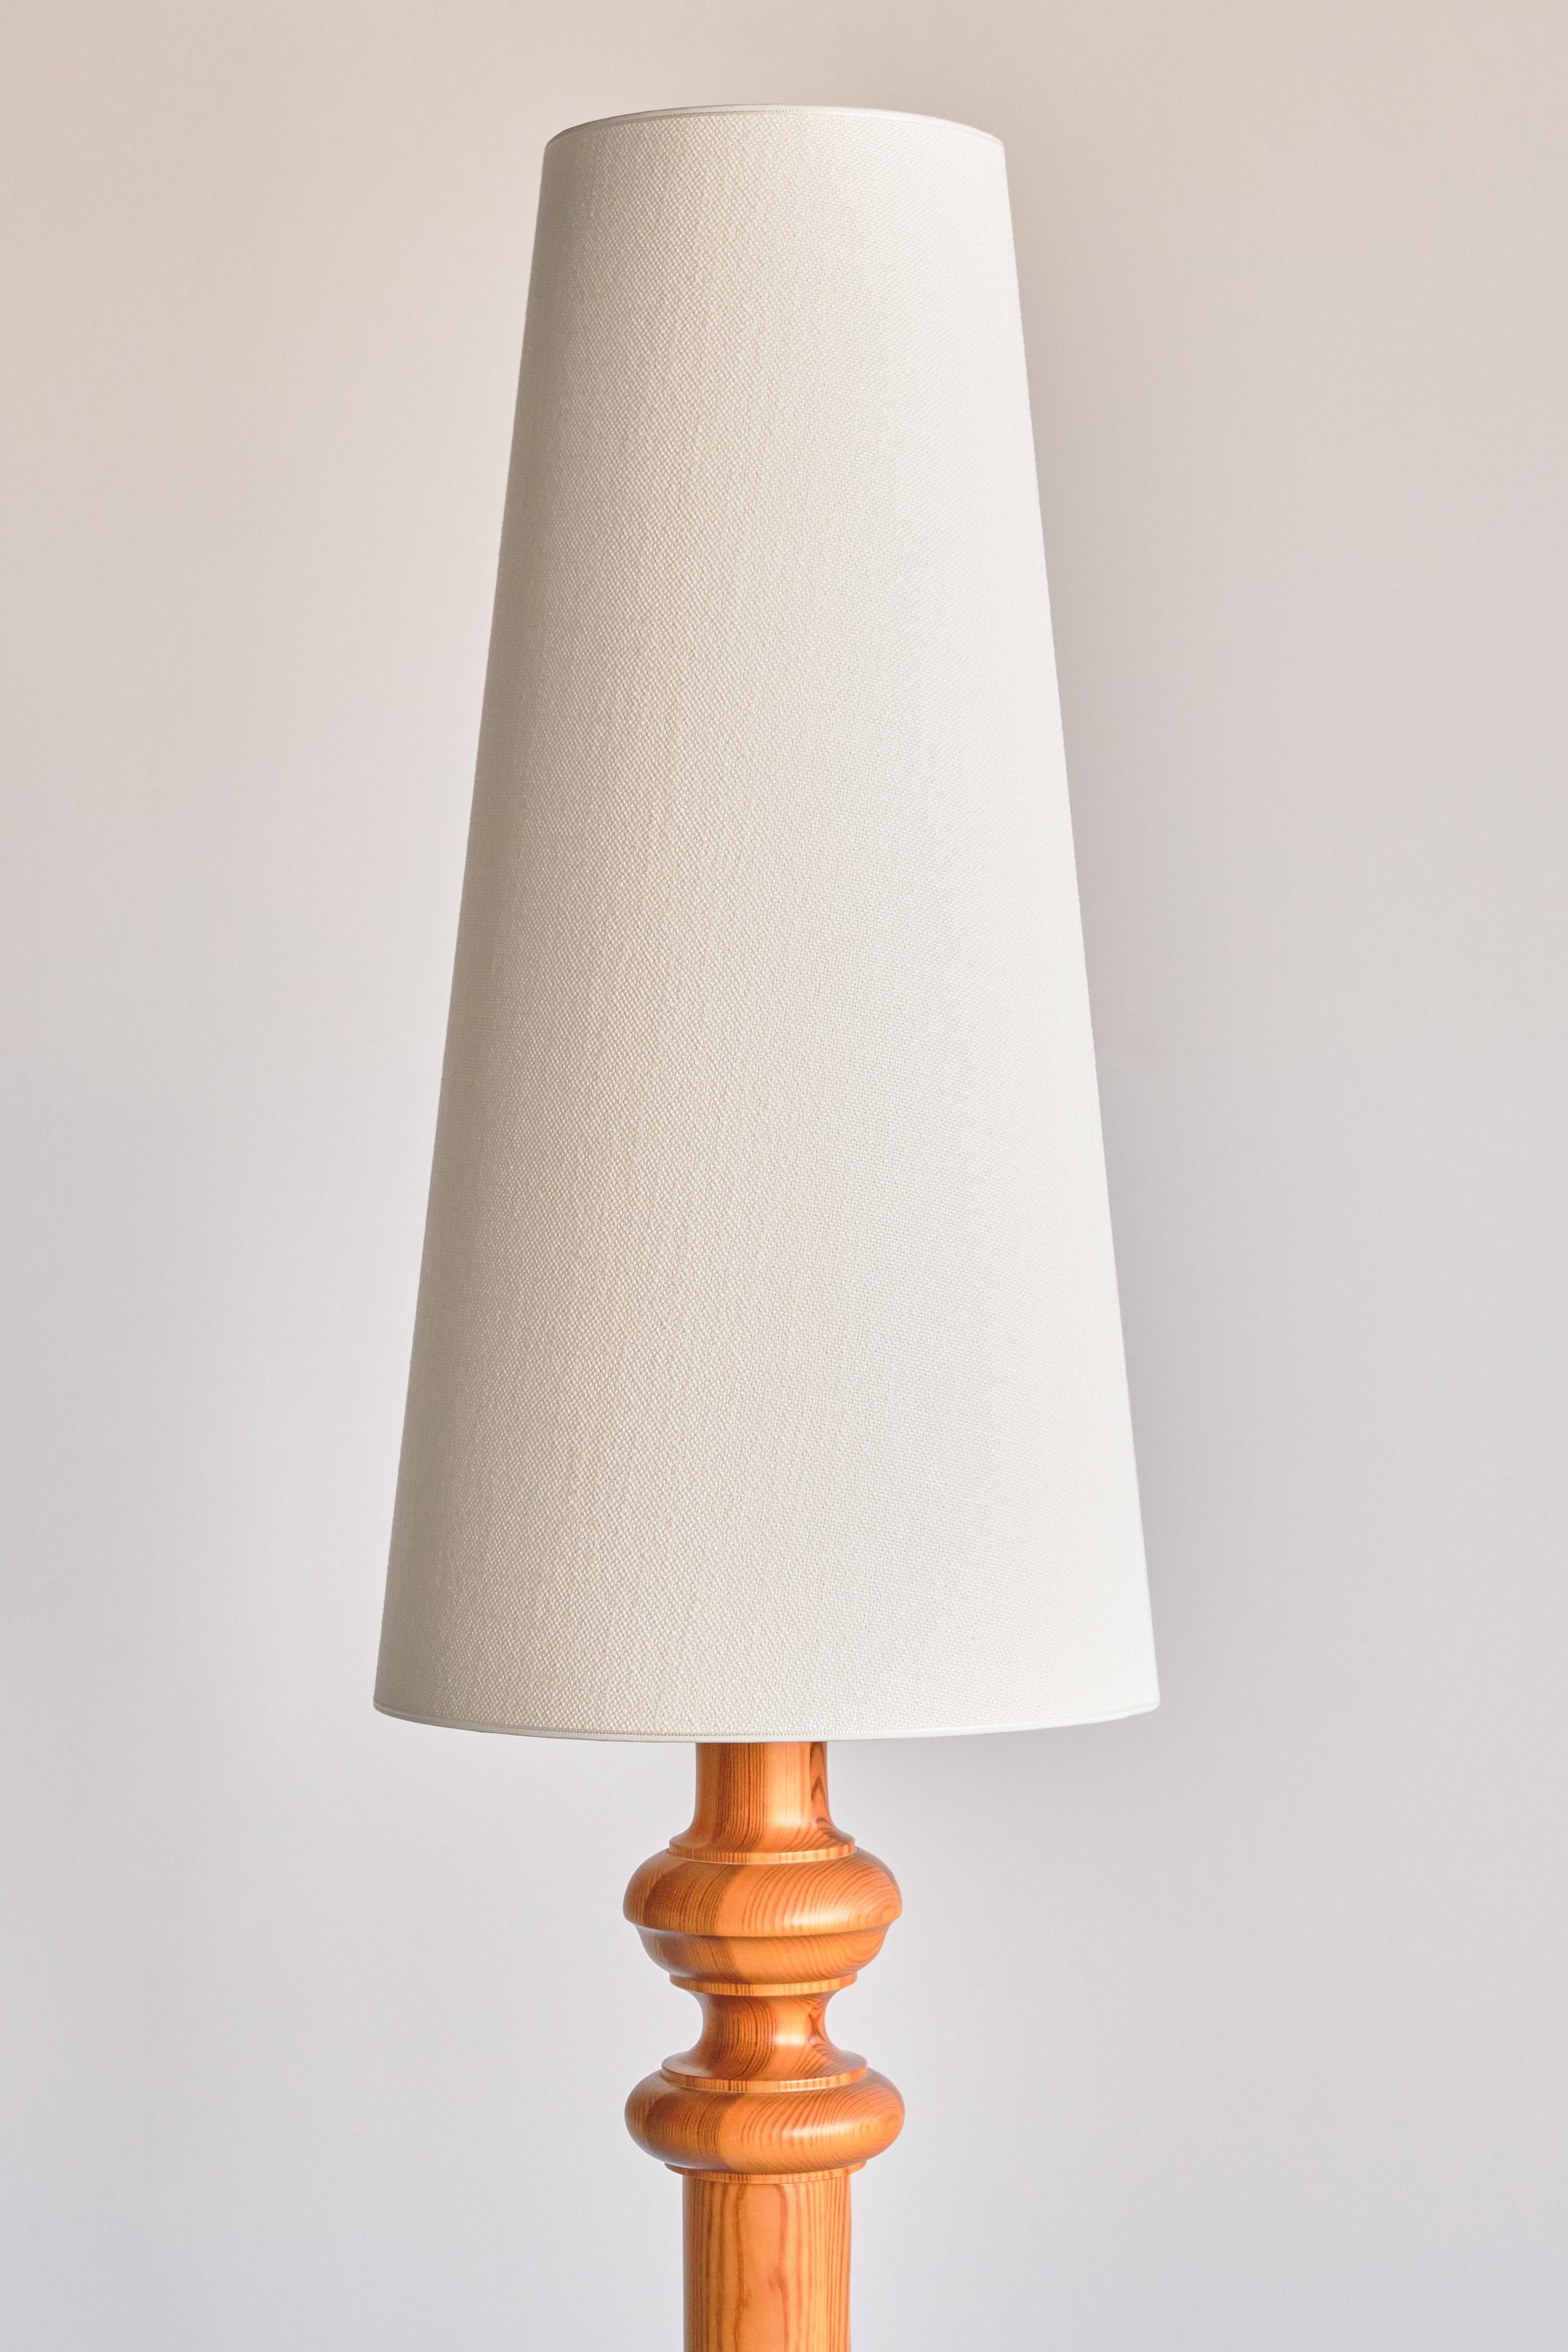 tall wood floor lamp